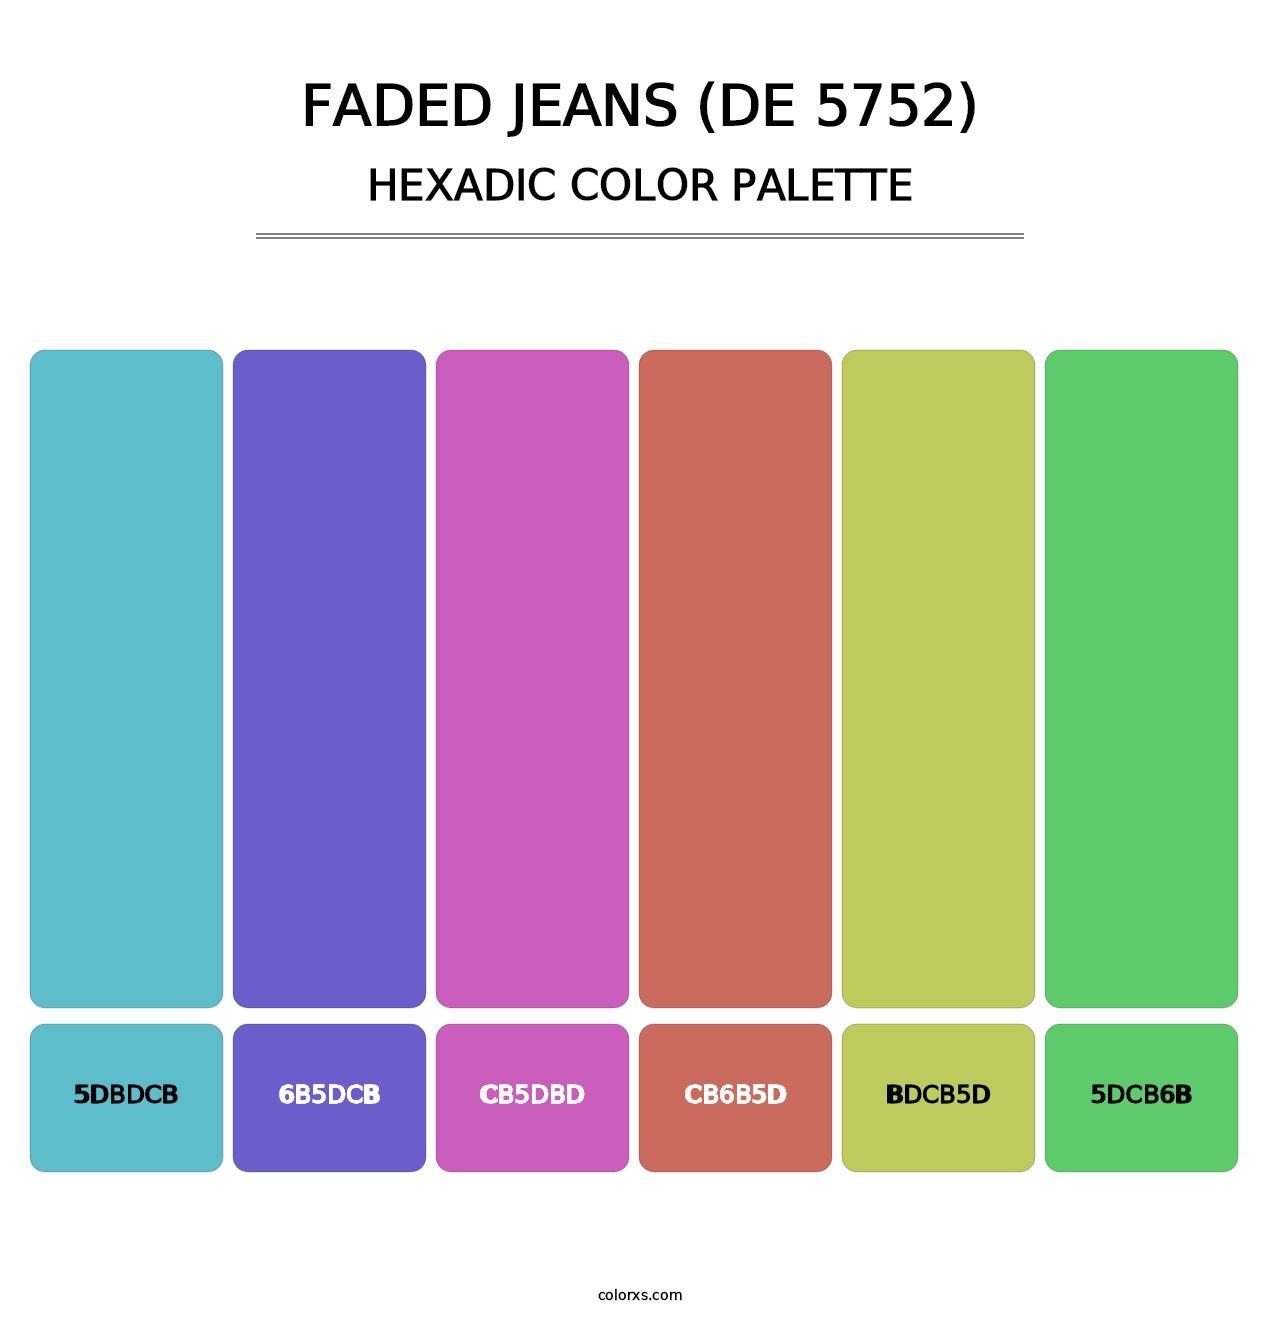 Faded Jeans (DE 5752) - Hexadic Color Palette